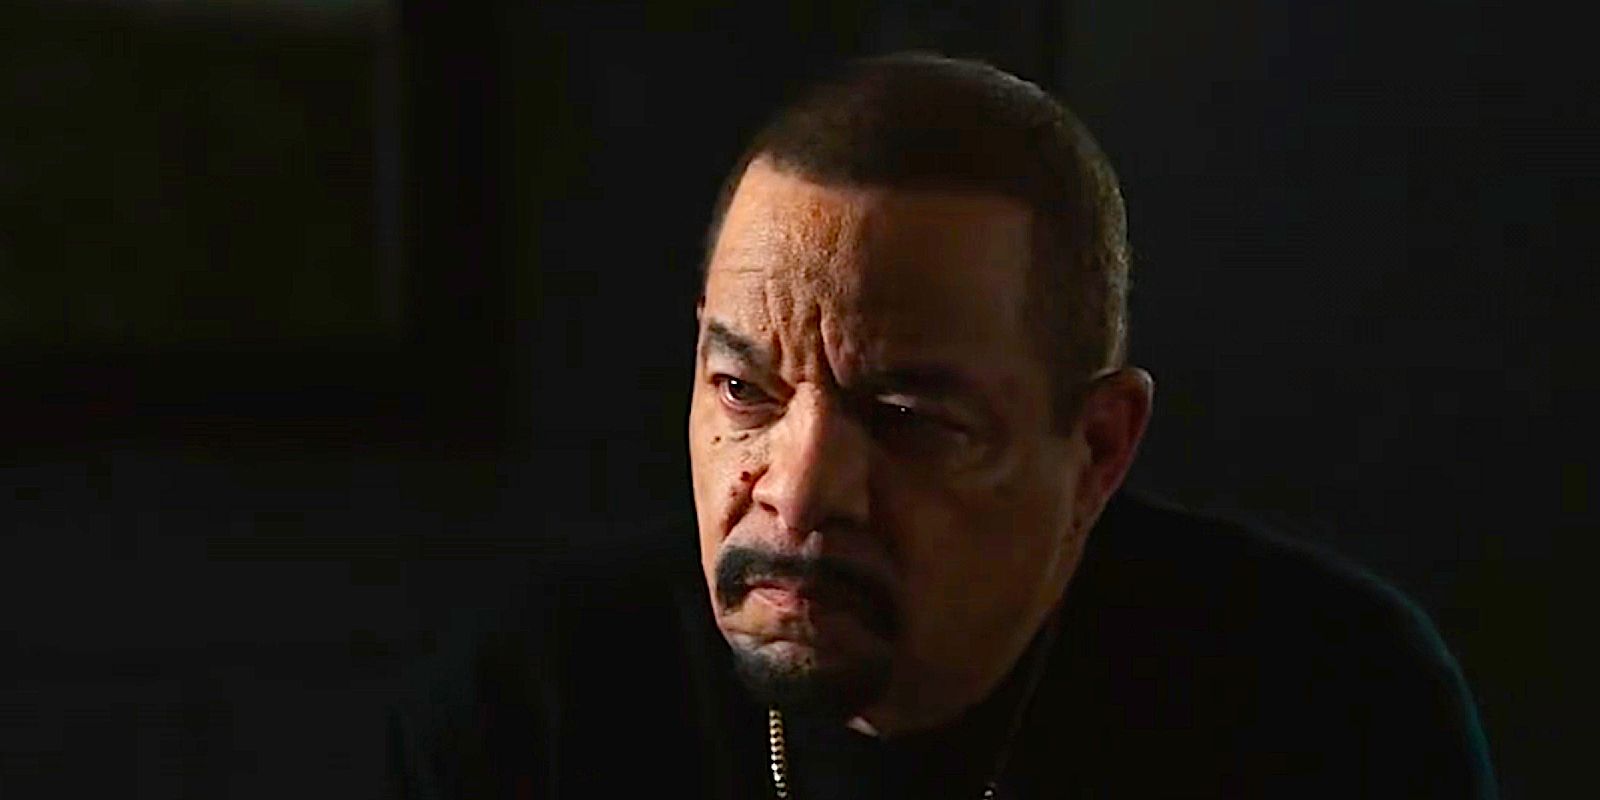 Ice-T as Sergeant Tutuola in Law & Order: SVU Season 24 Episode 15